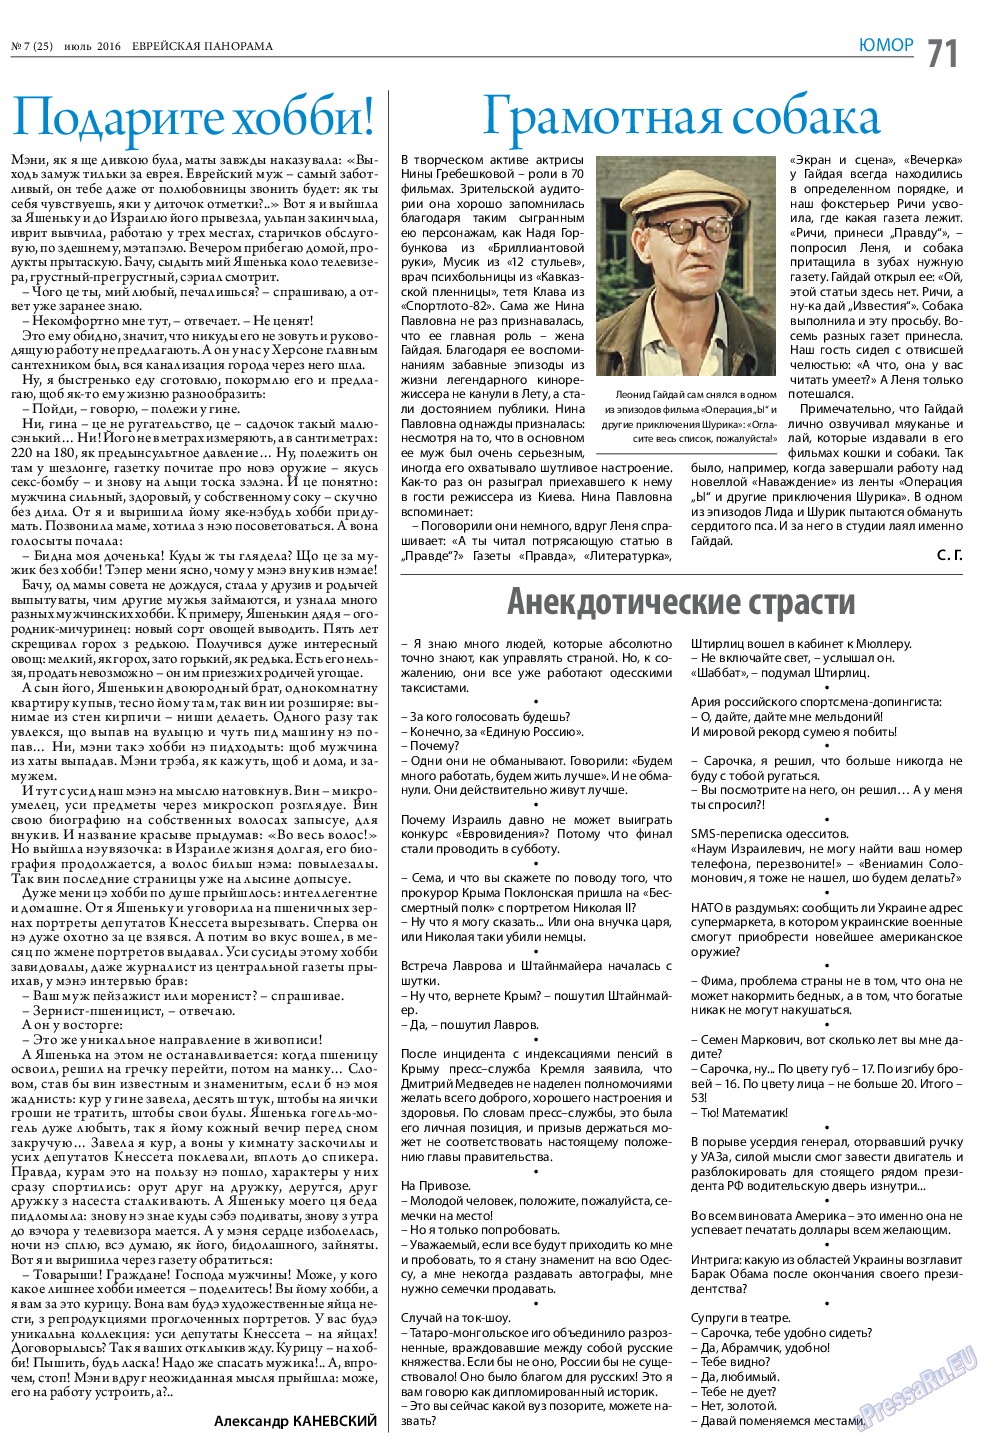 Еврейская панорама, газета. 2016 №7 стр.71